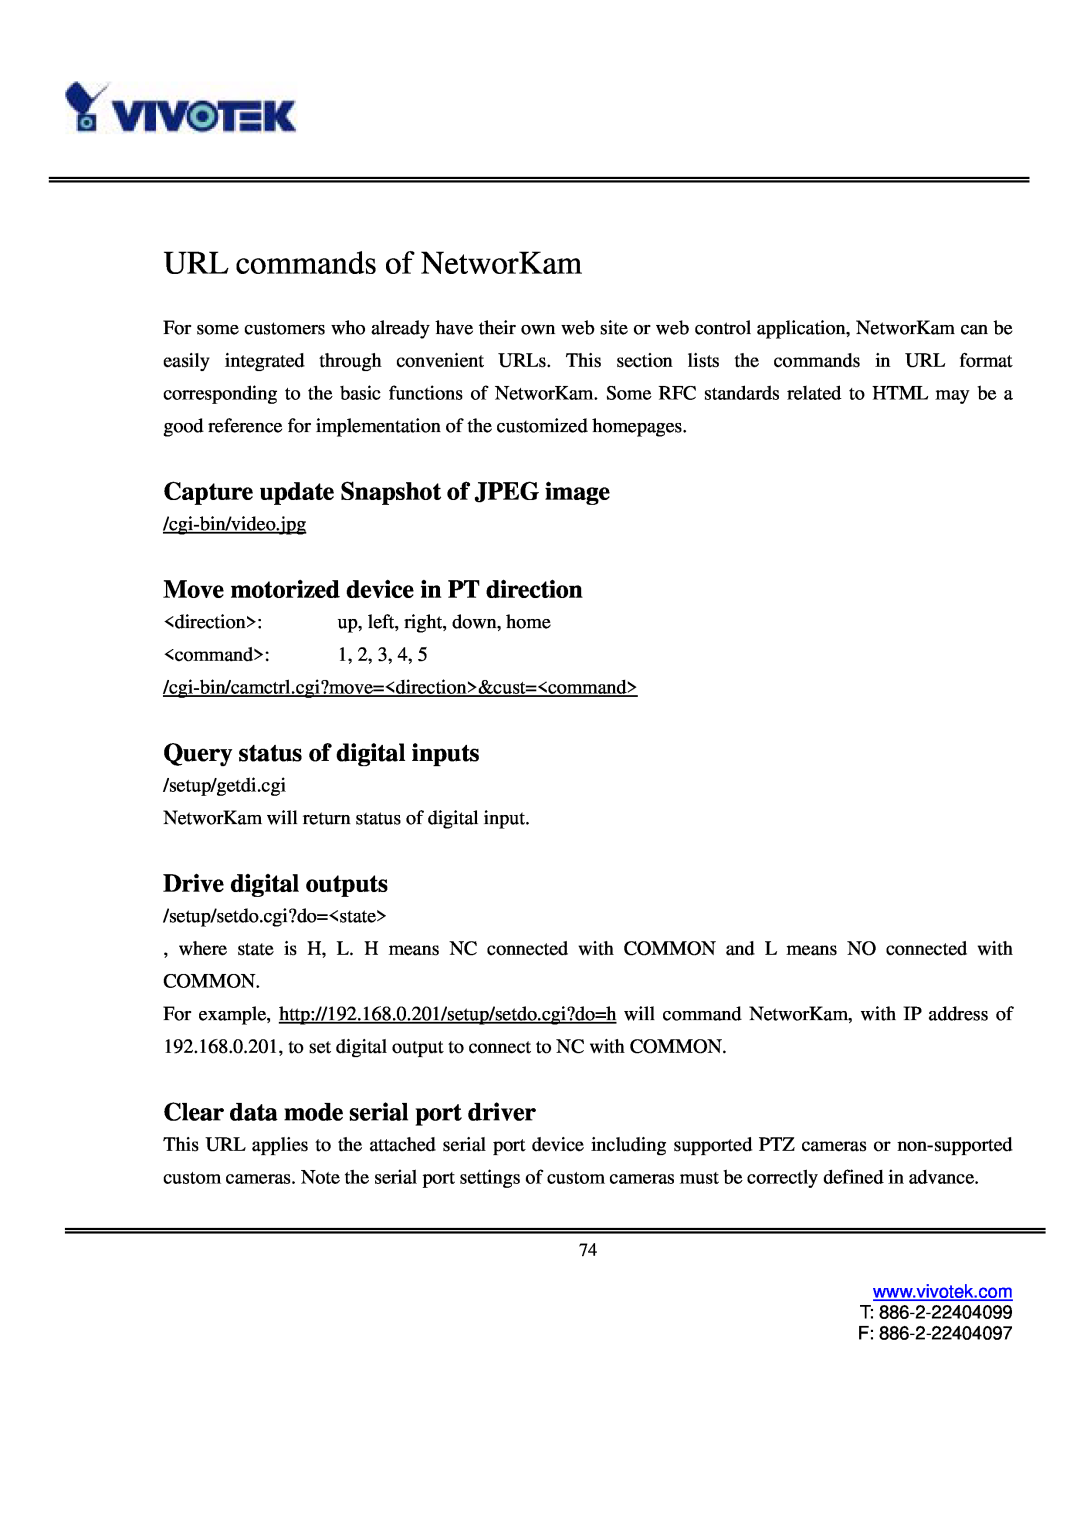 Vivotek IP3111/IP3121 user manual URL commands of NetworKam, Capture update Snapshot of JPEG image, Drive digital outputs 